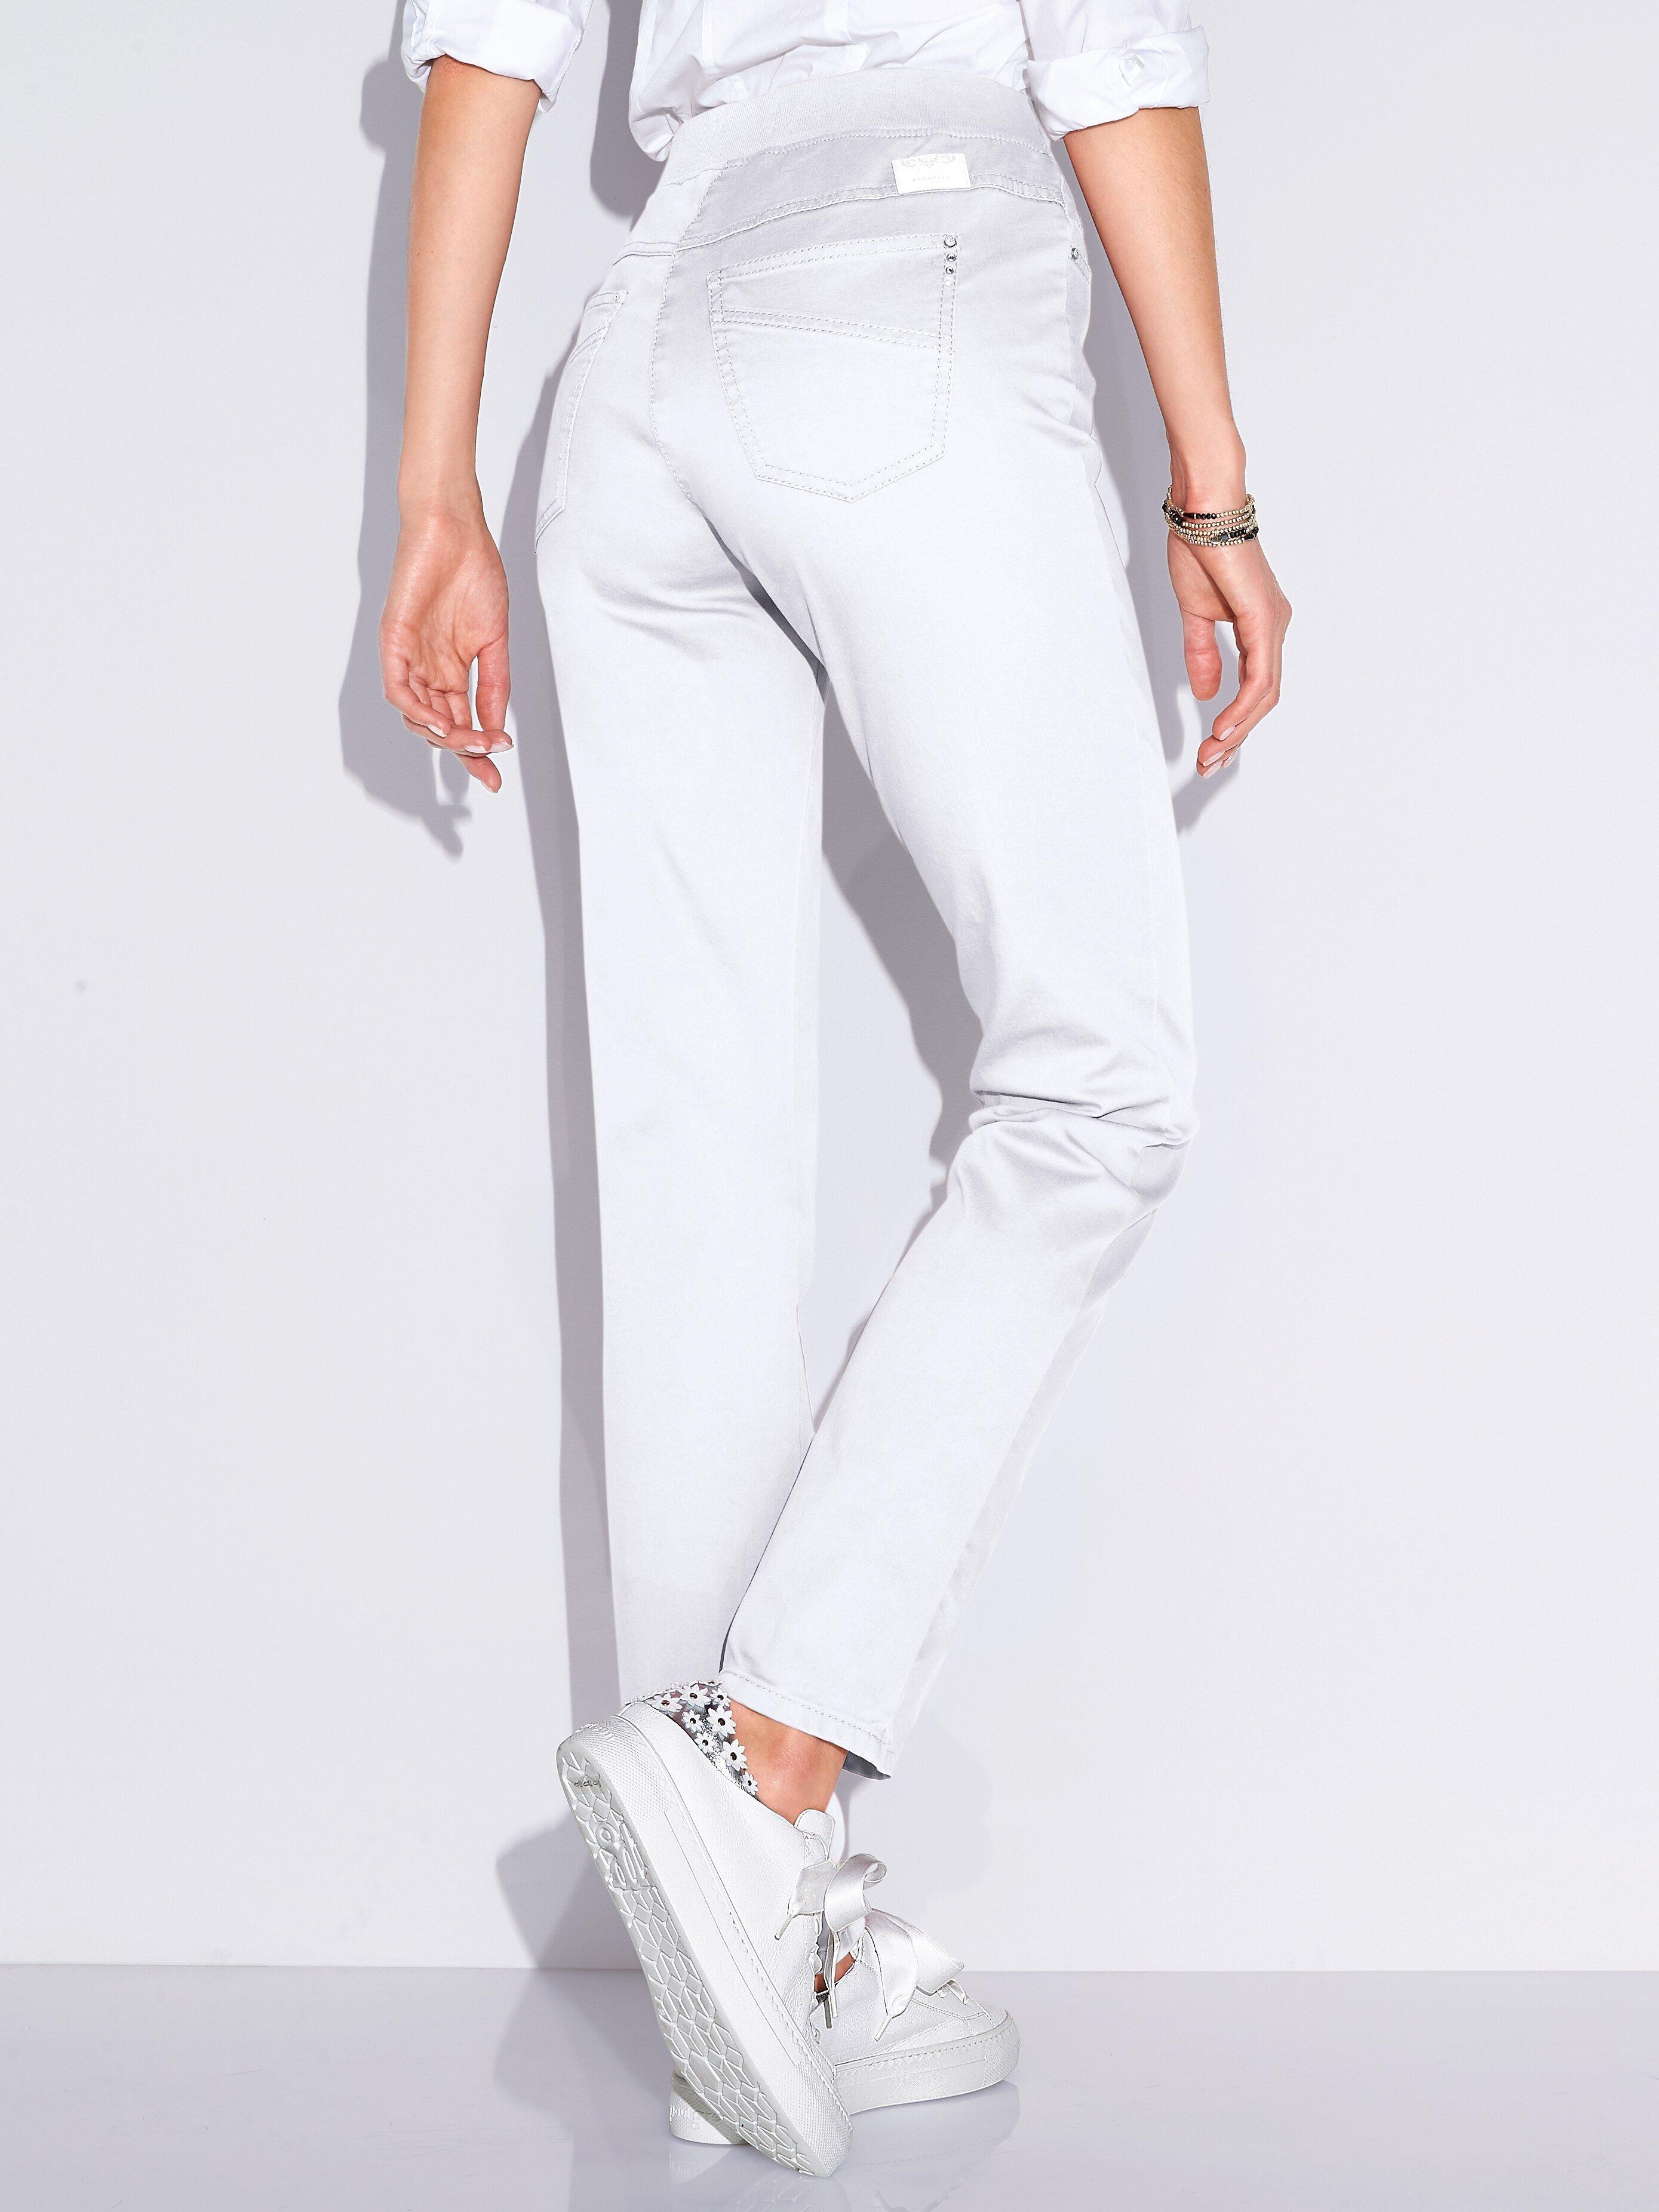 Raphaela by Brax - Comfort Plus-jeans model Carina